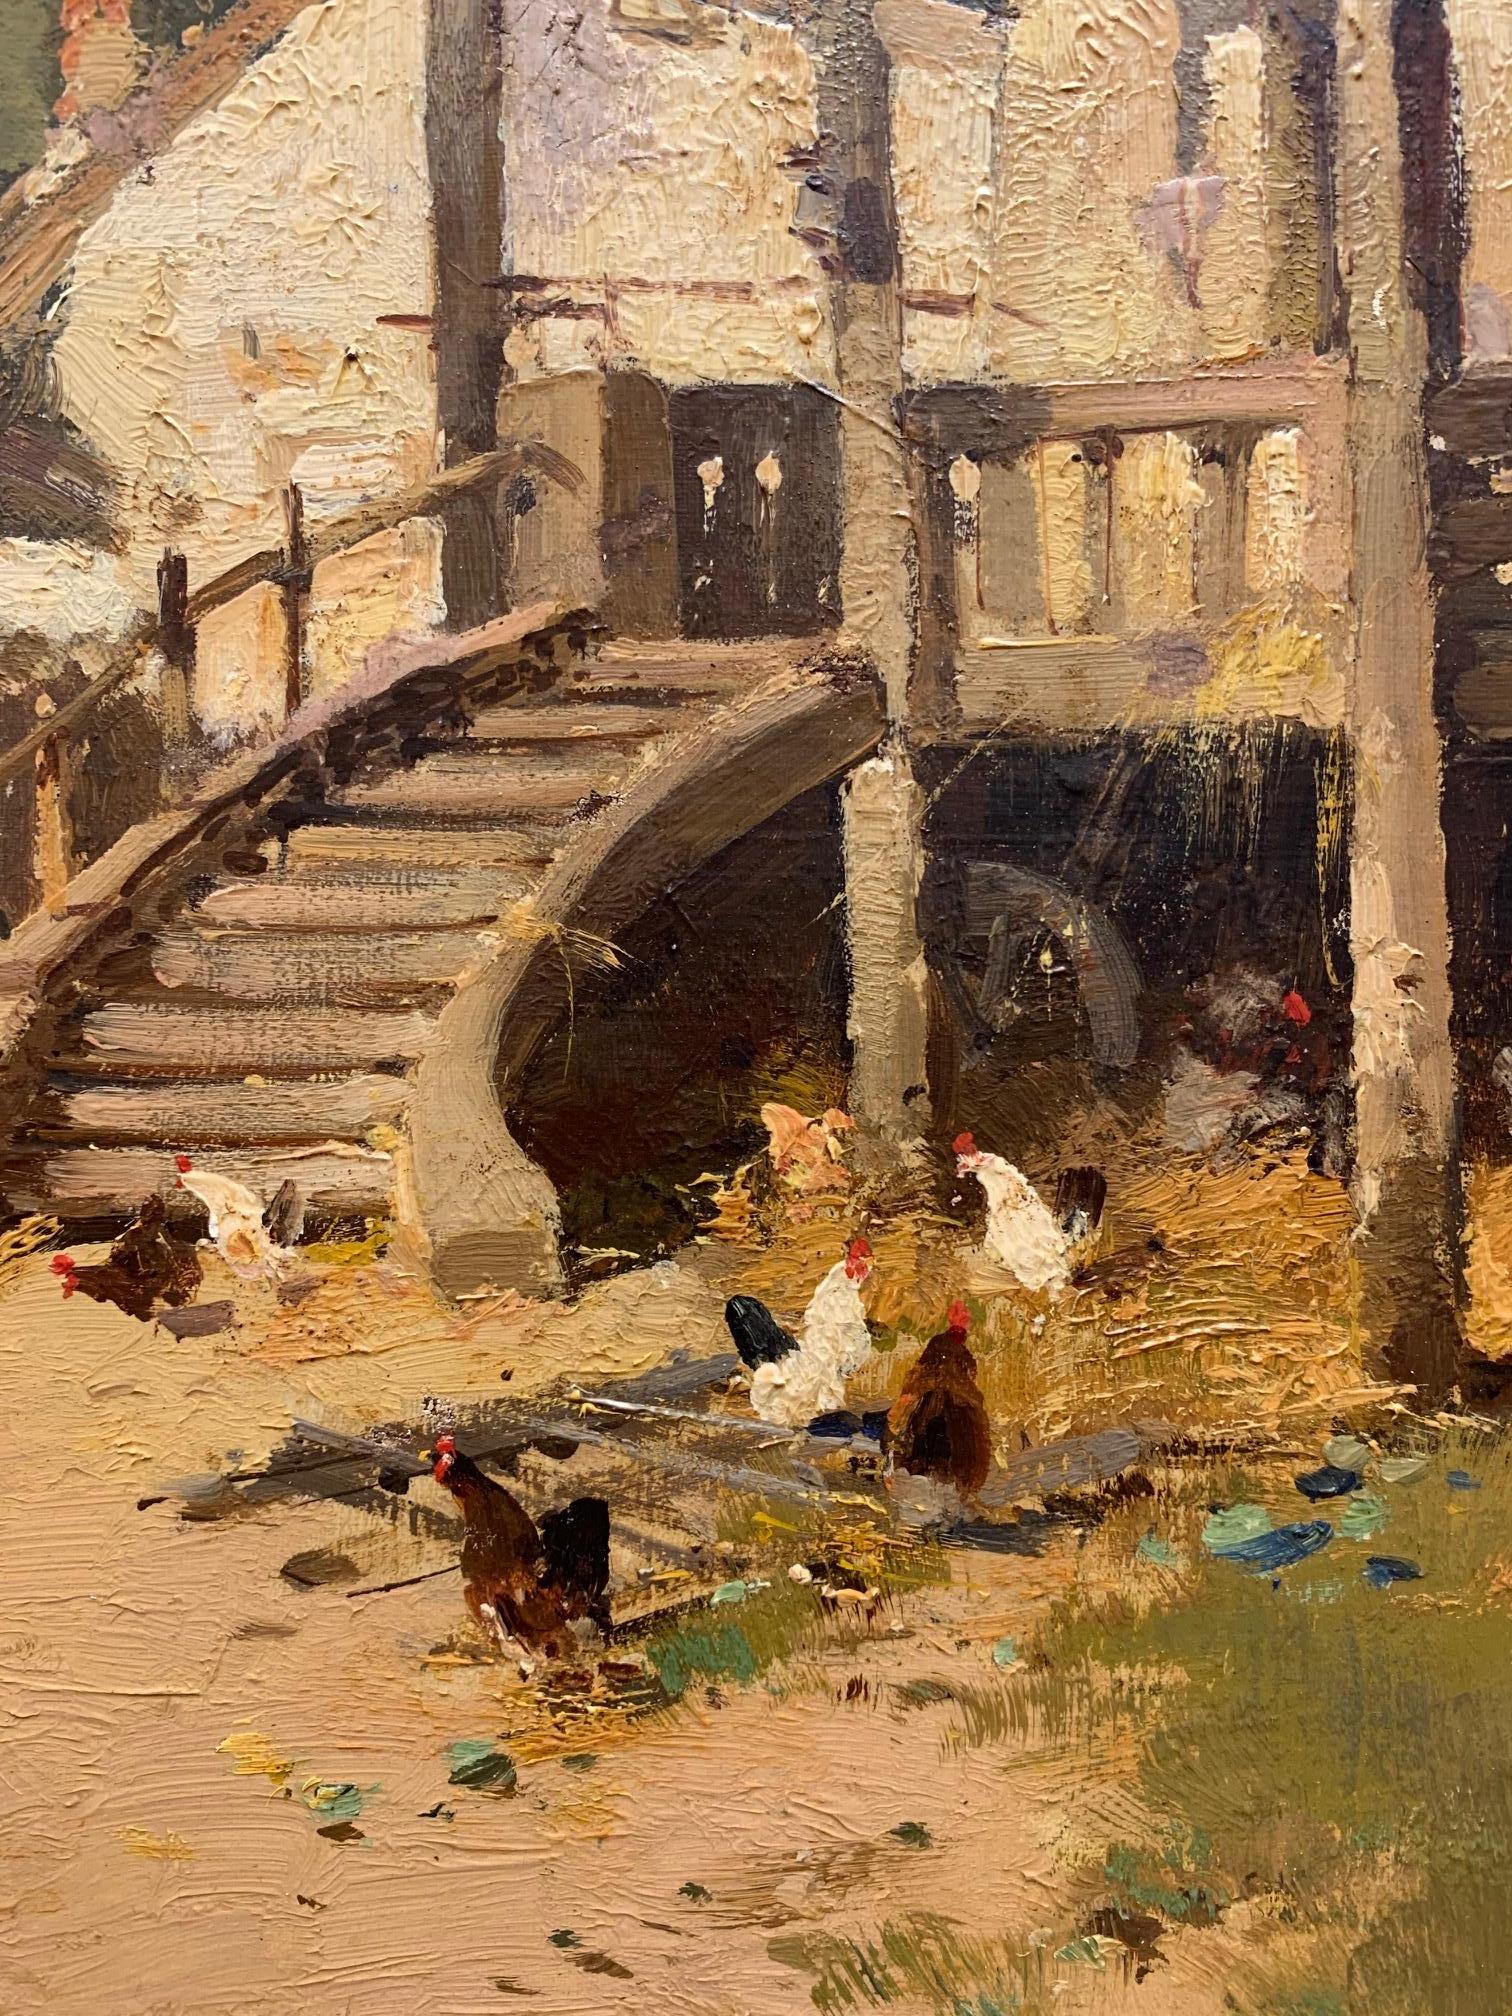 Gîte à la campagne, Impressionist 19. Jahrhundert (Braun), Landscape Painting, von Eugene Galien-Laloue